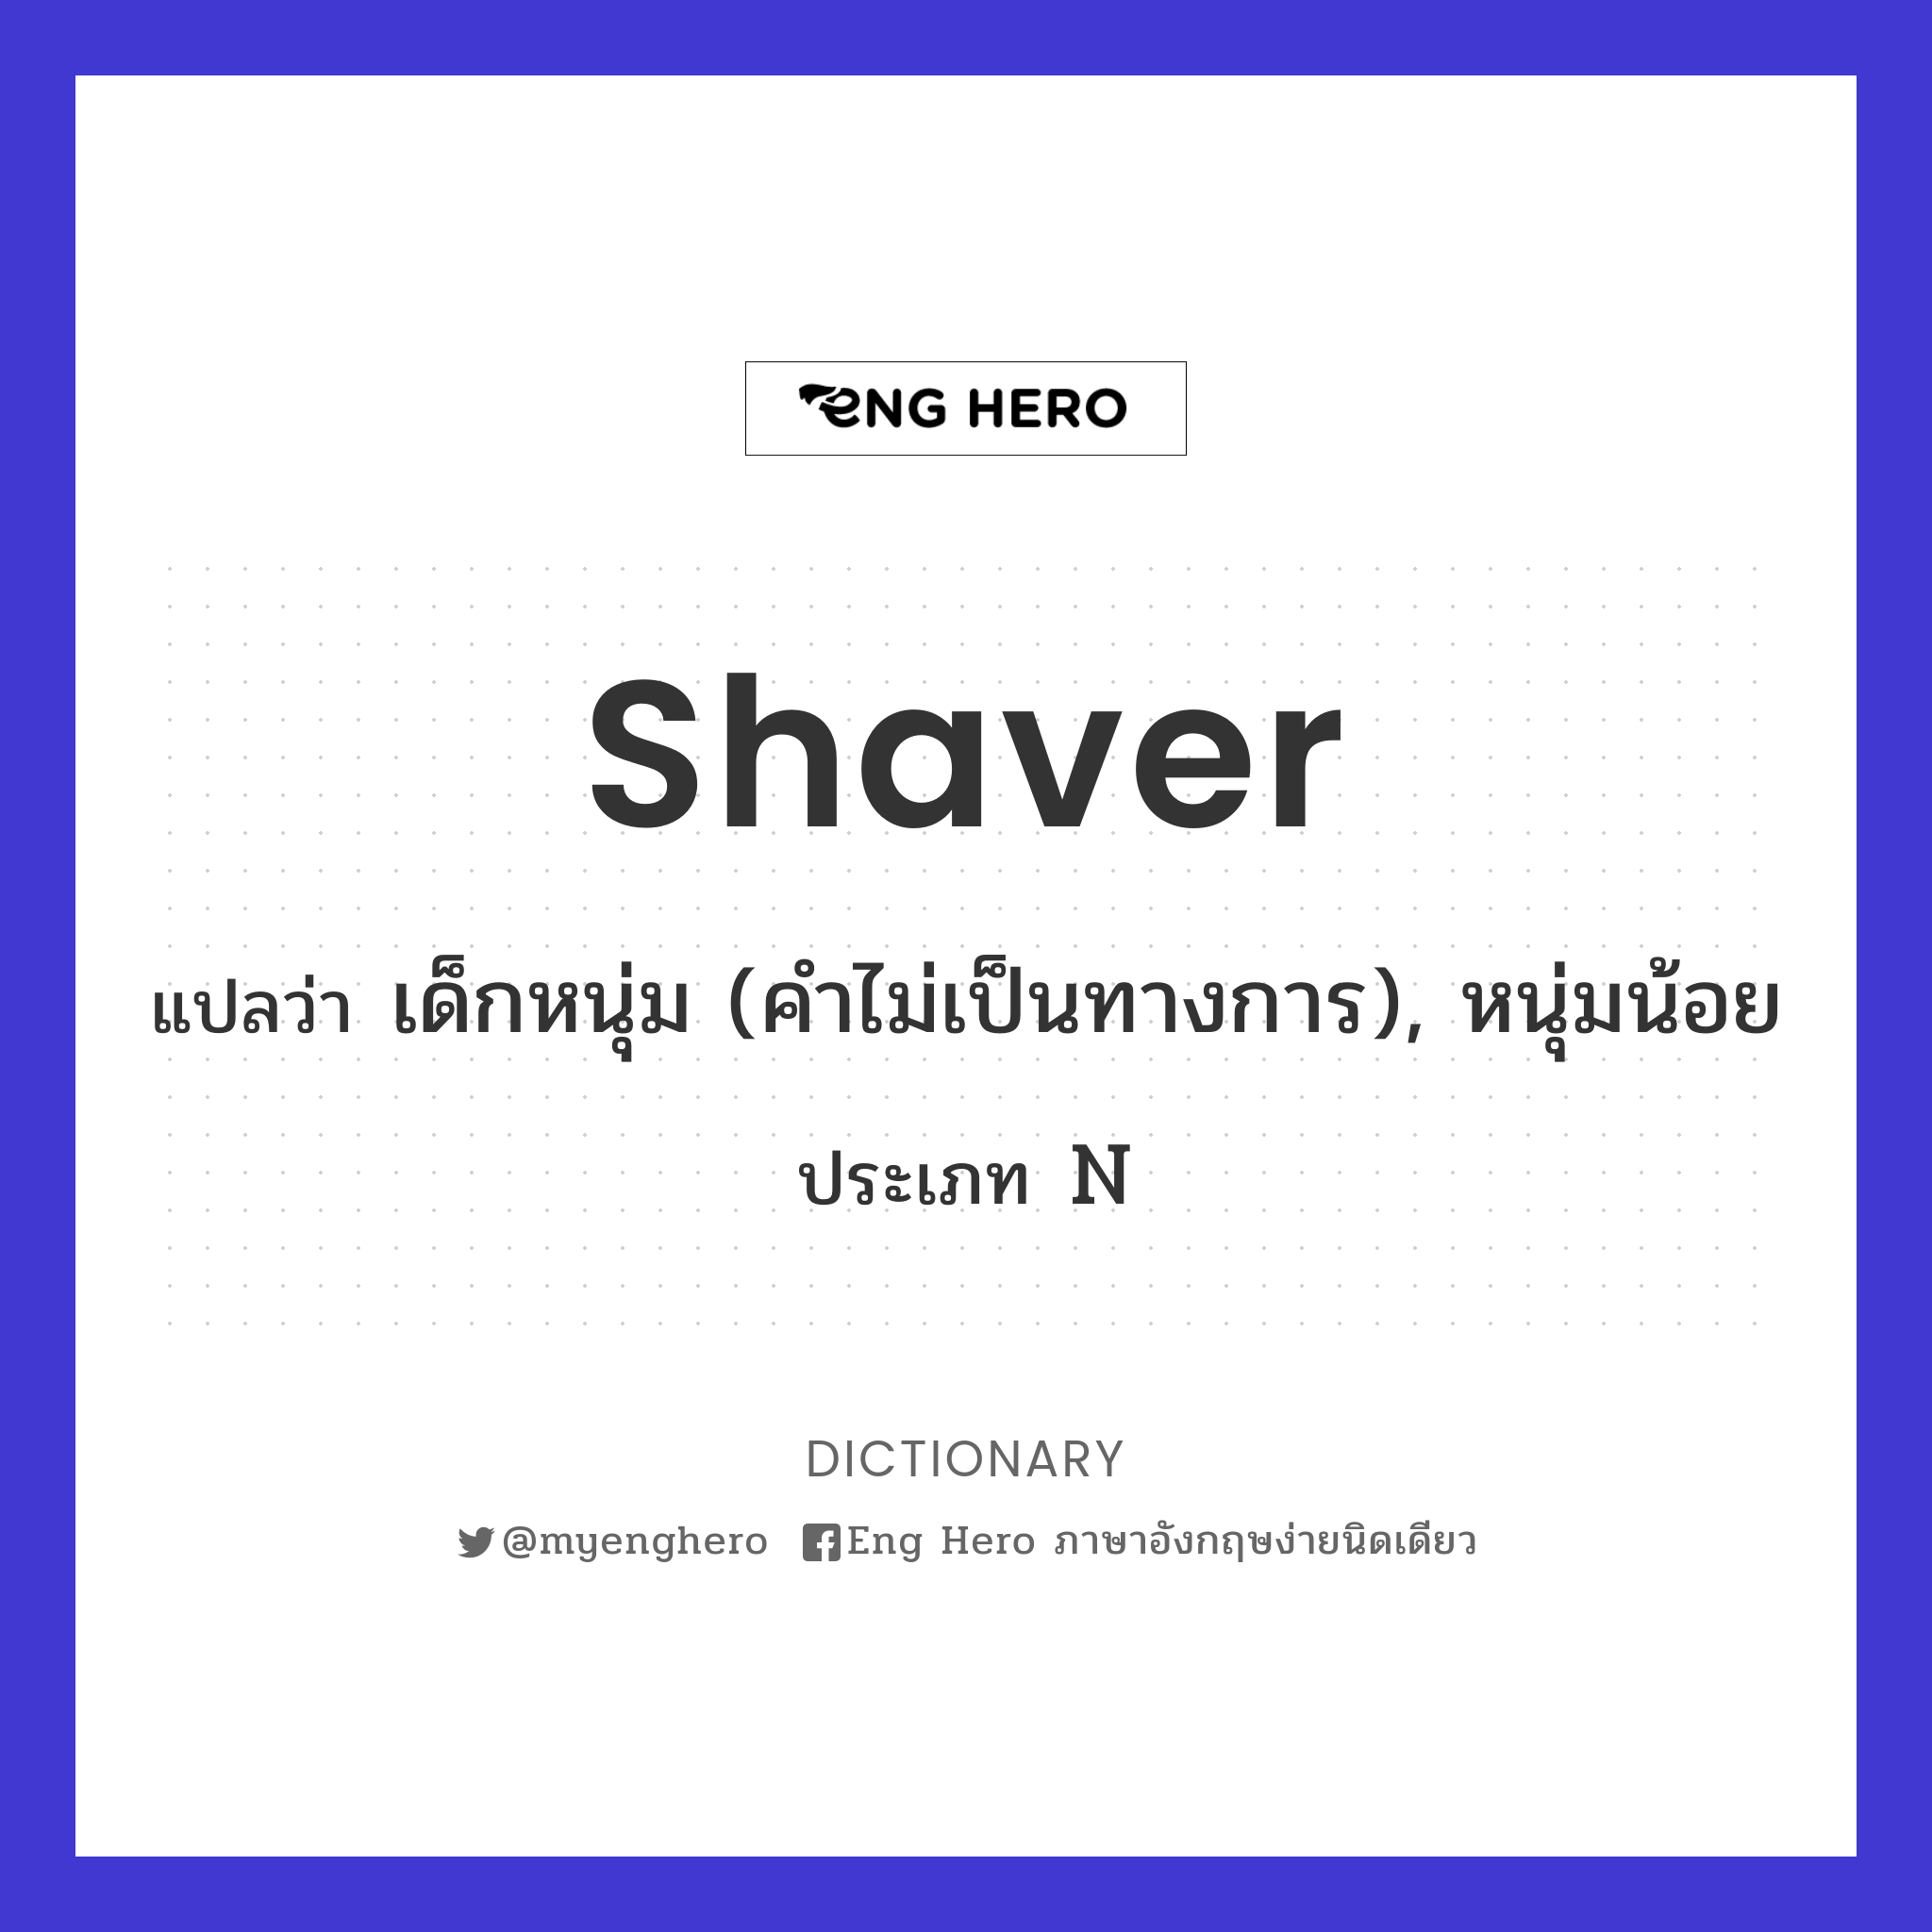 shaver